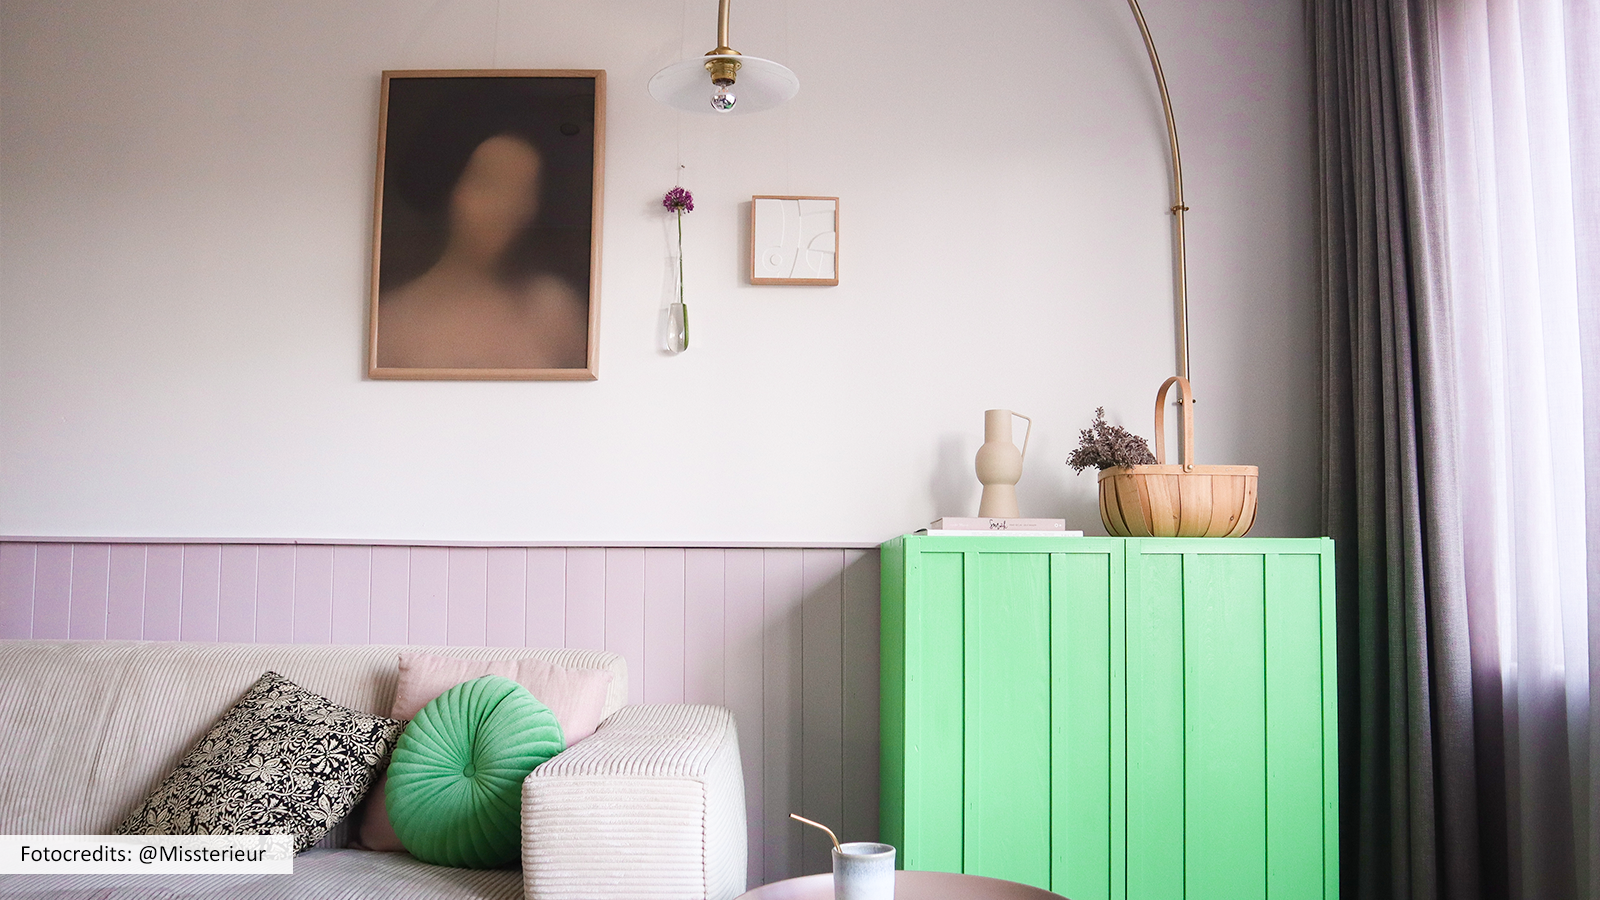 NL lente decoratie aan muur in woonkamer aan click rail ophangsysteem